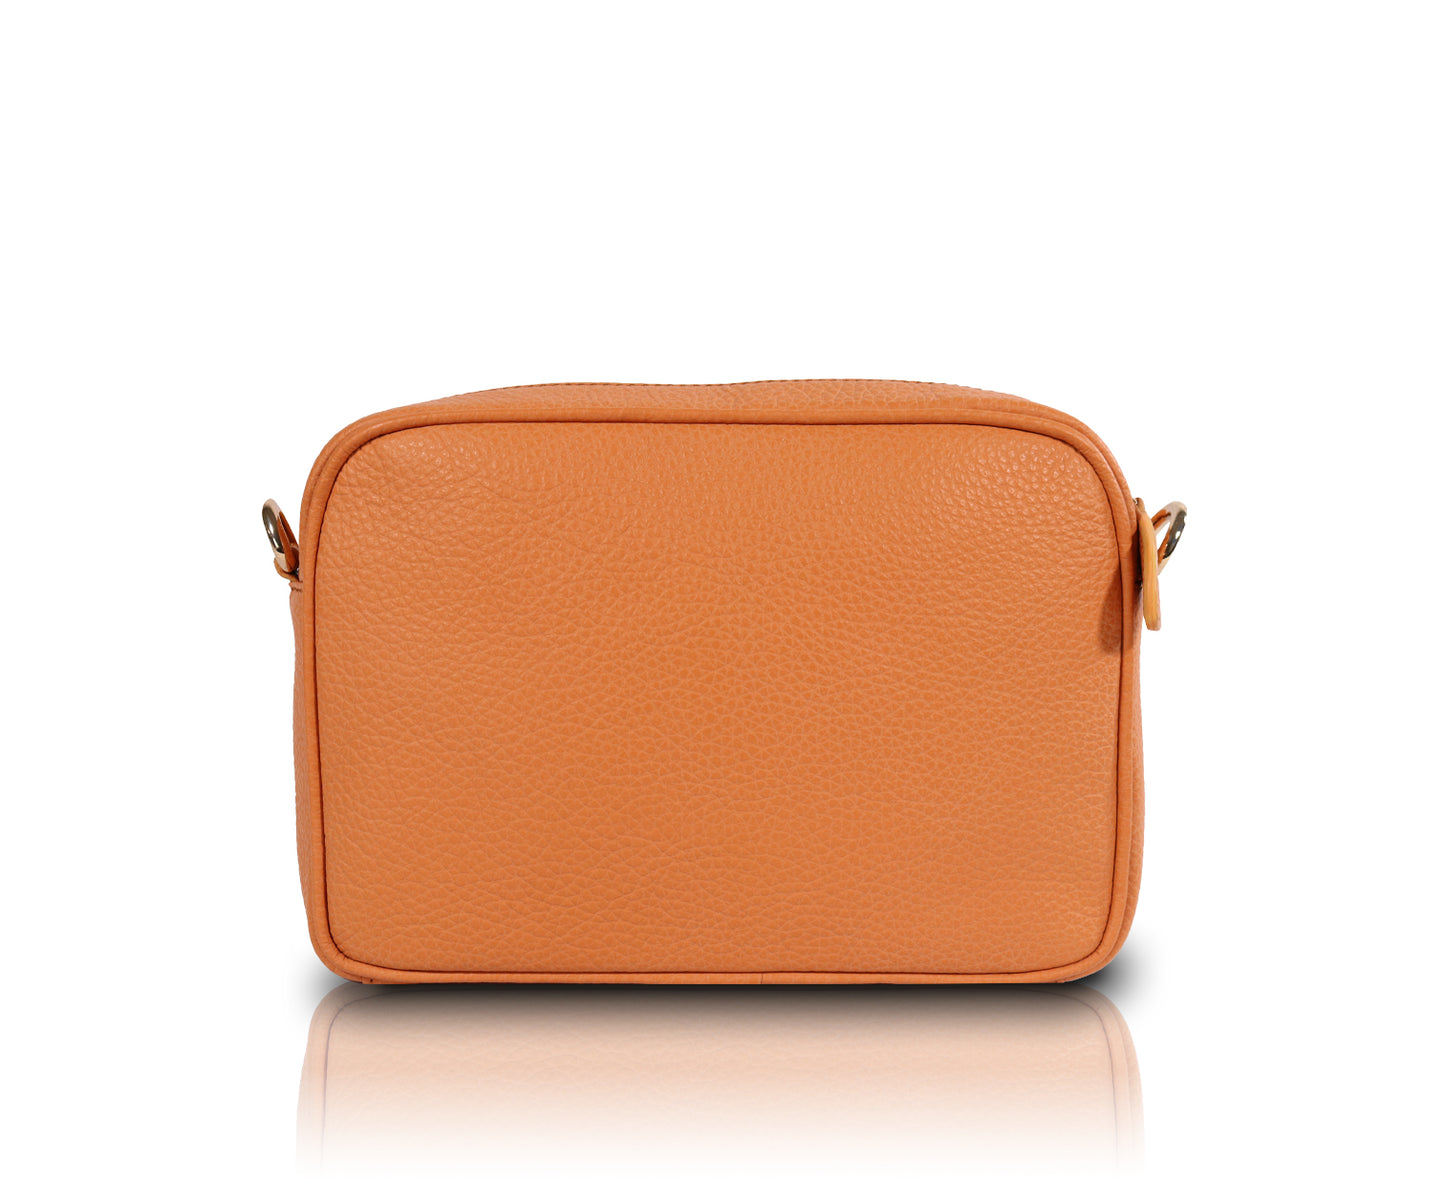 Leather Camera Bag - Orange